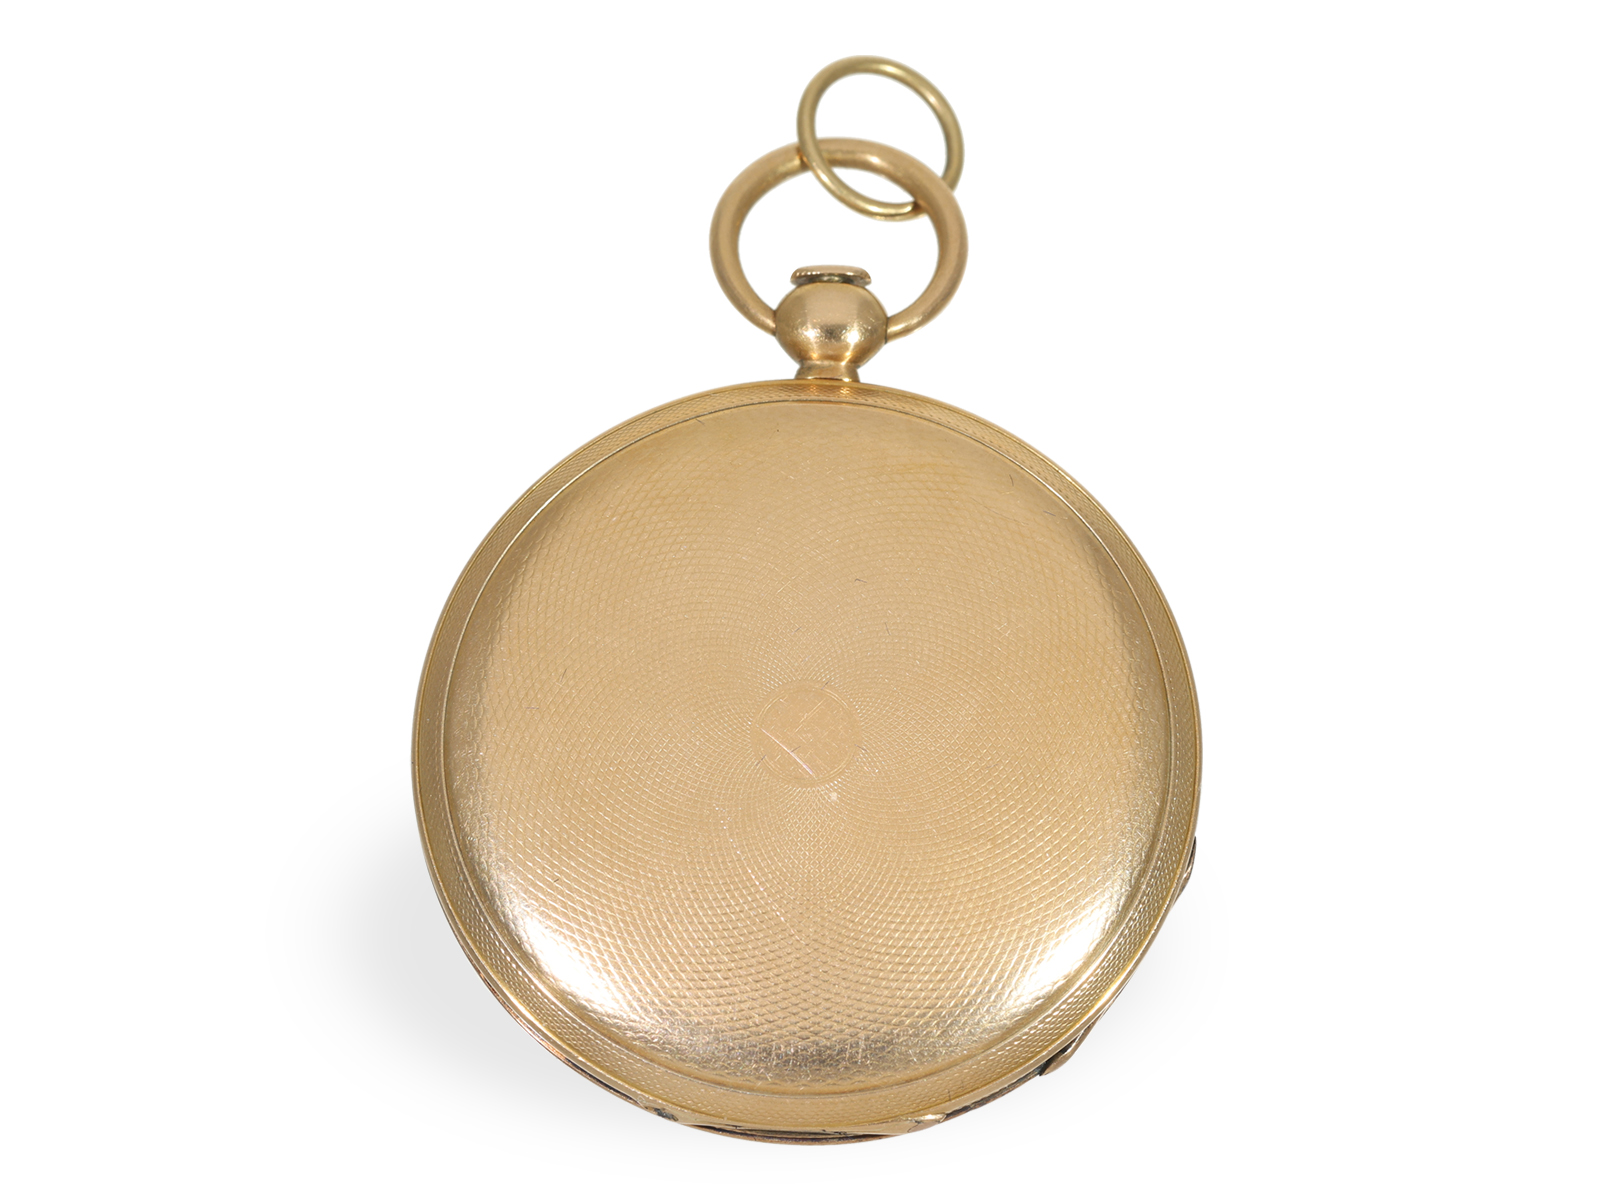 Pocket watch: very flat lepine around 1820 - Image 6 of 6